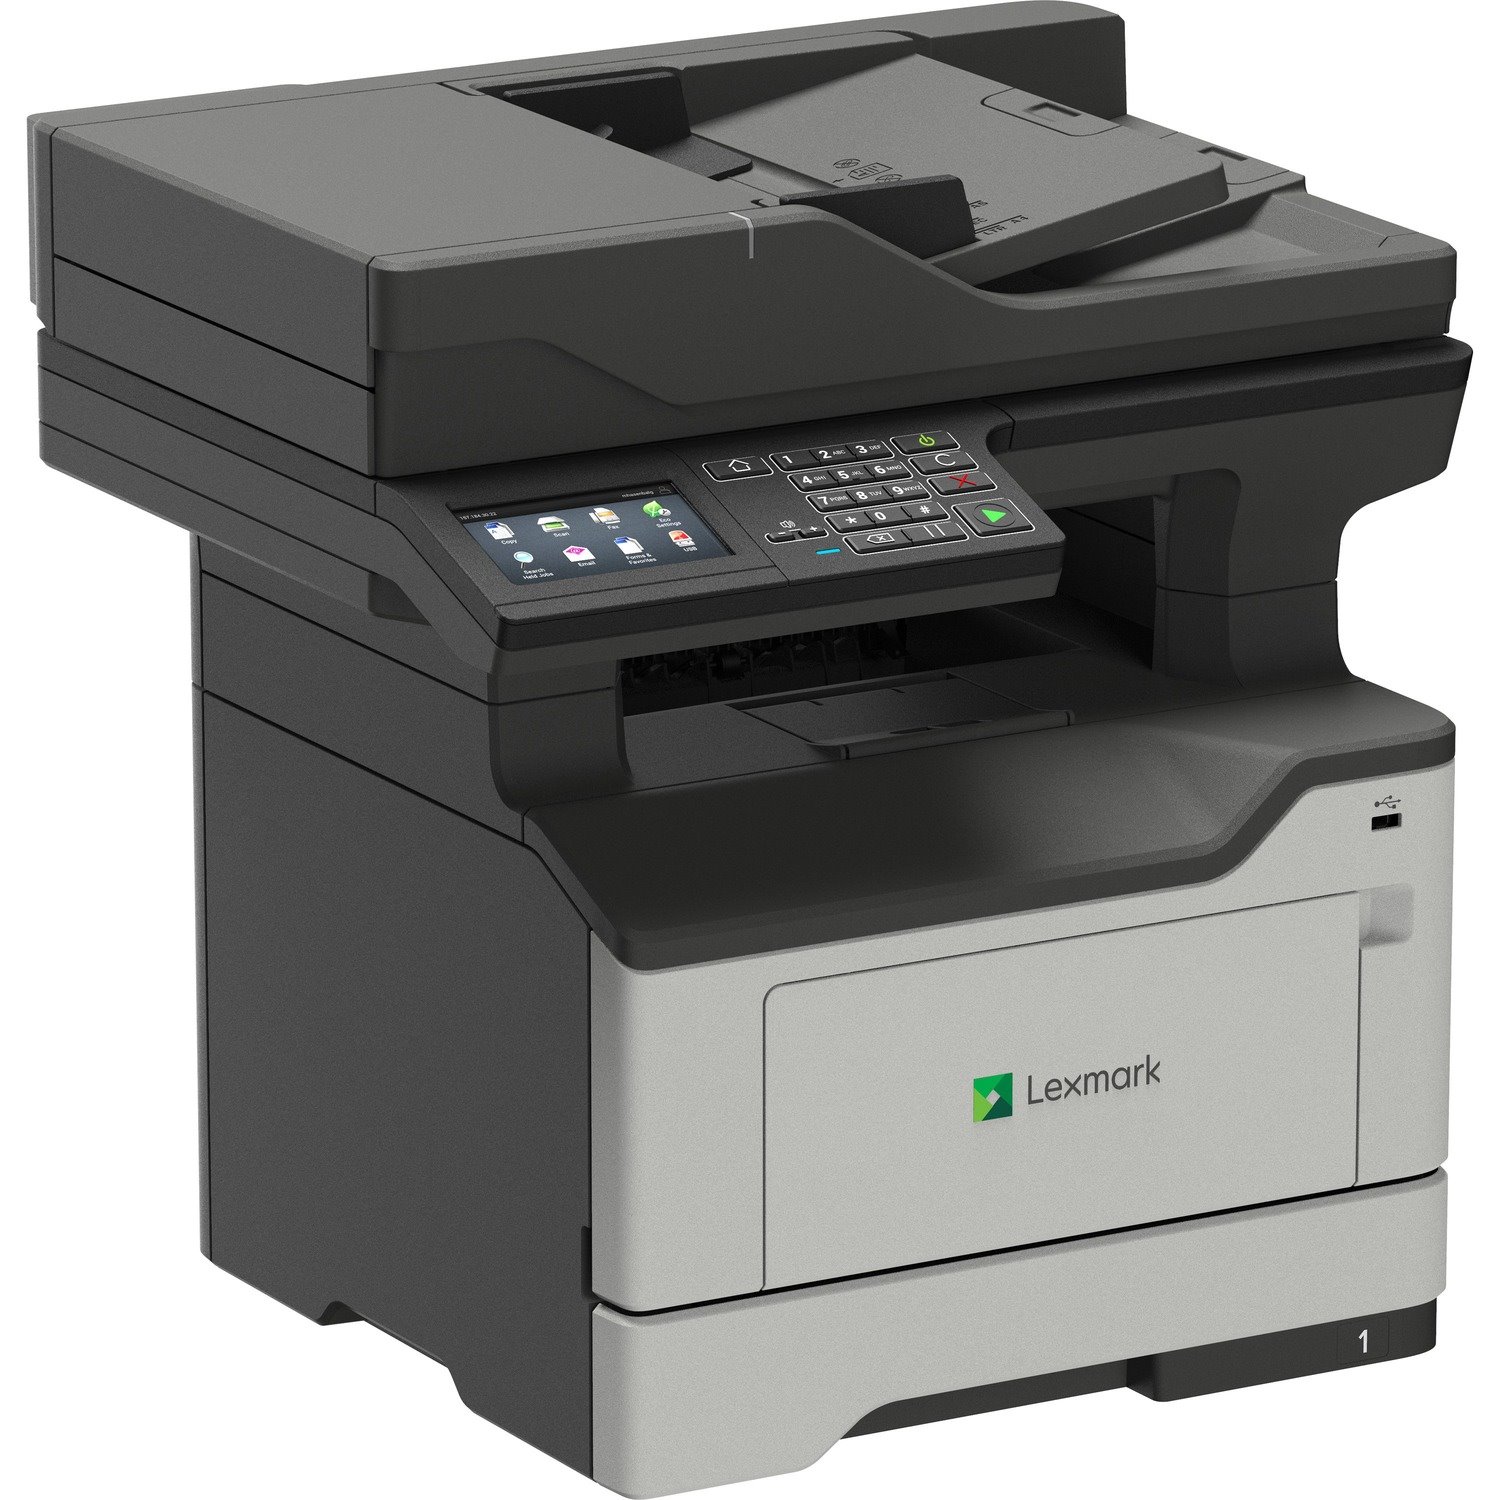 Lexmark MX521de Laser Multifunction Printer - Monochrome